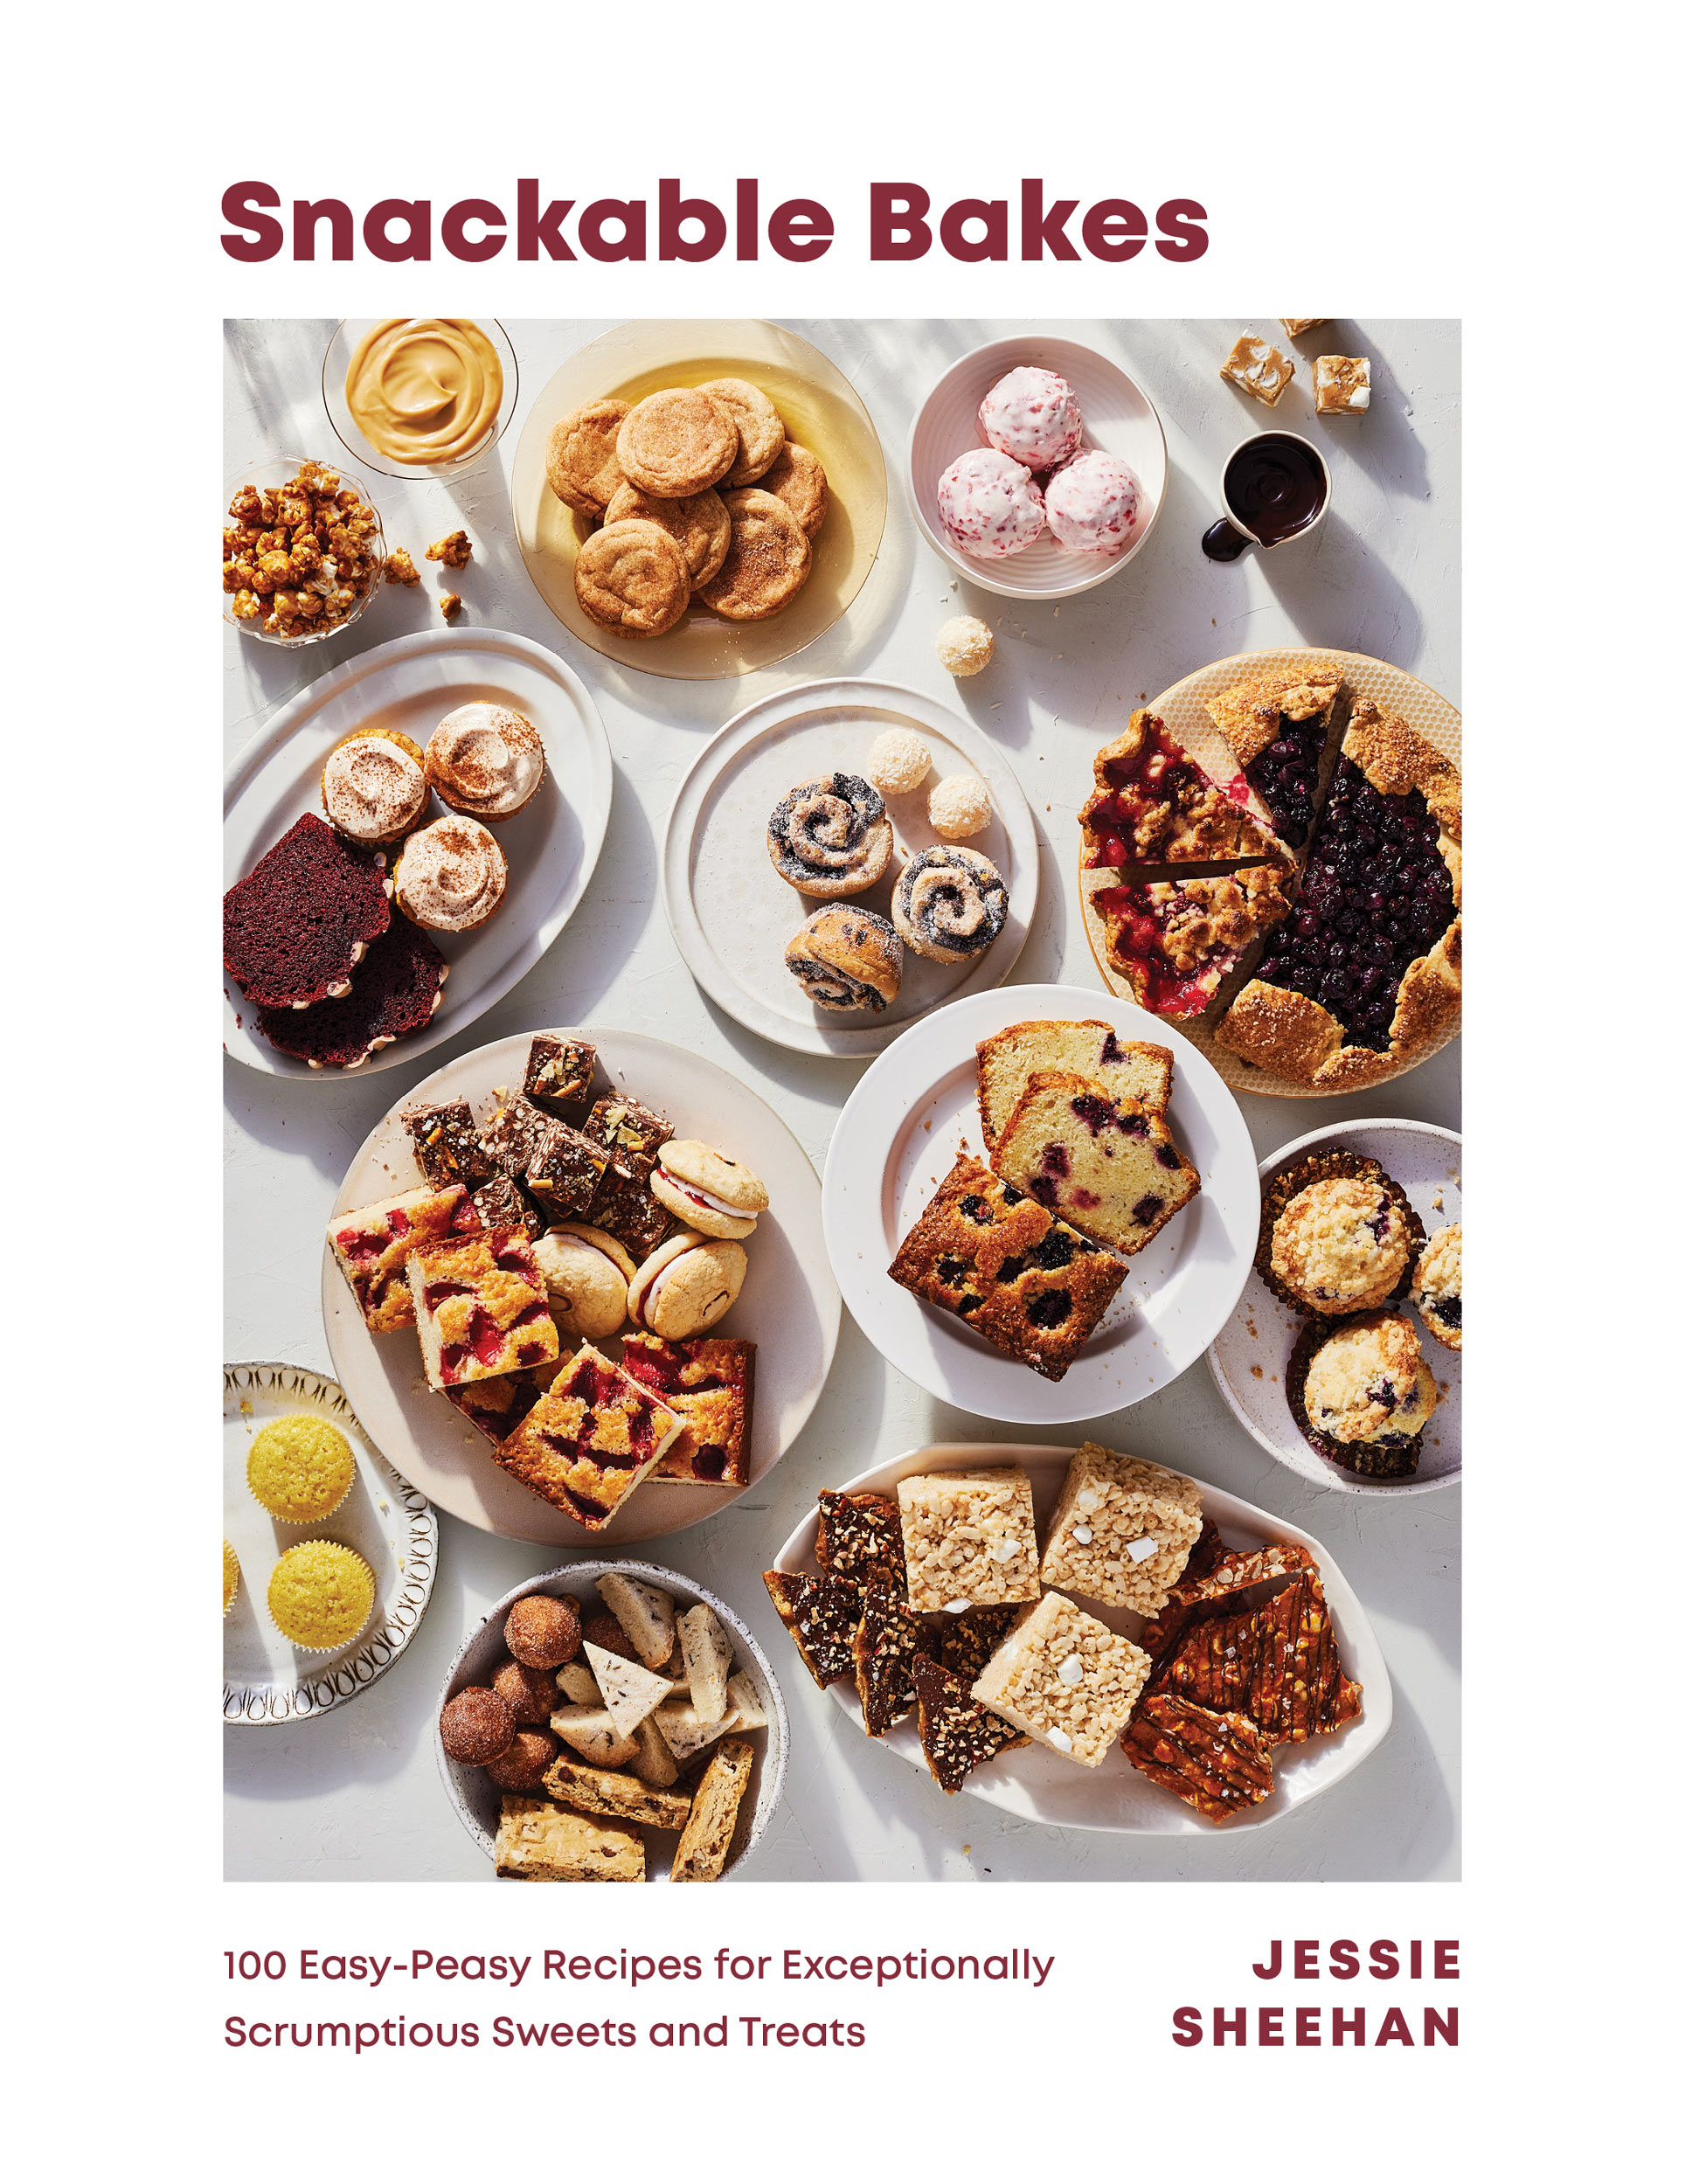 Snackable Bakes Cookbook by Jessie Sheehan